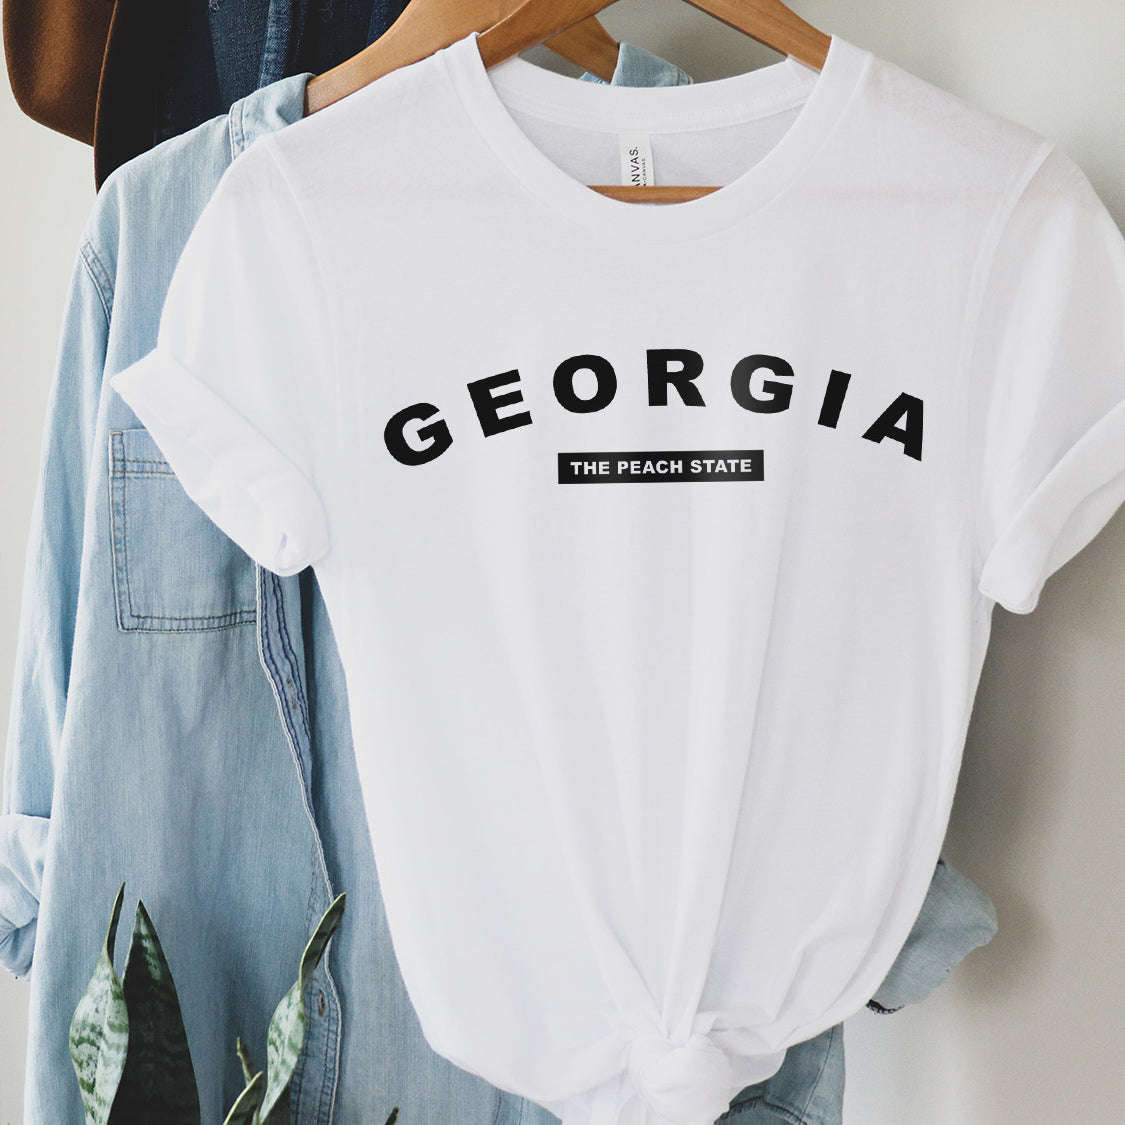 Georgia The Peach State T-shirt - United States Name & Slogan Minimal Design Printed Tee Shirt